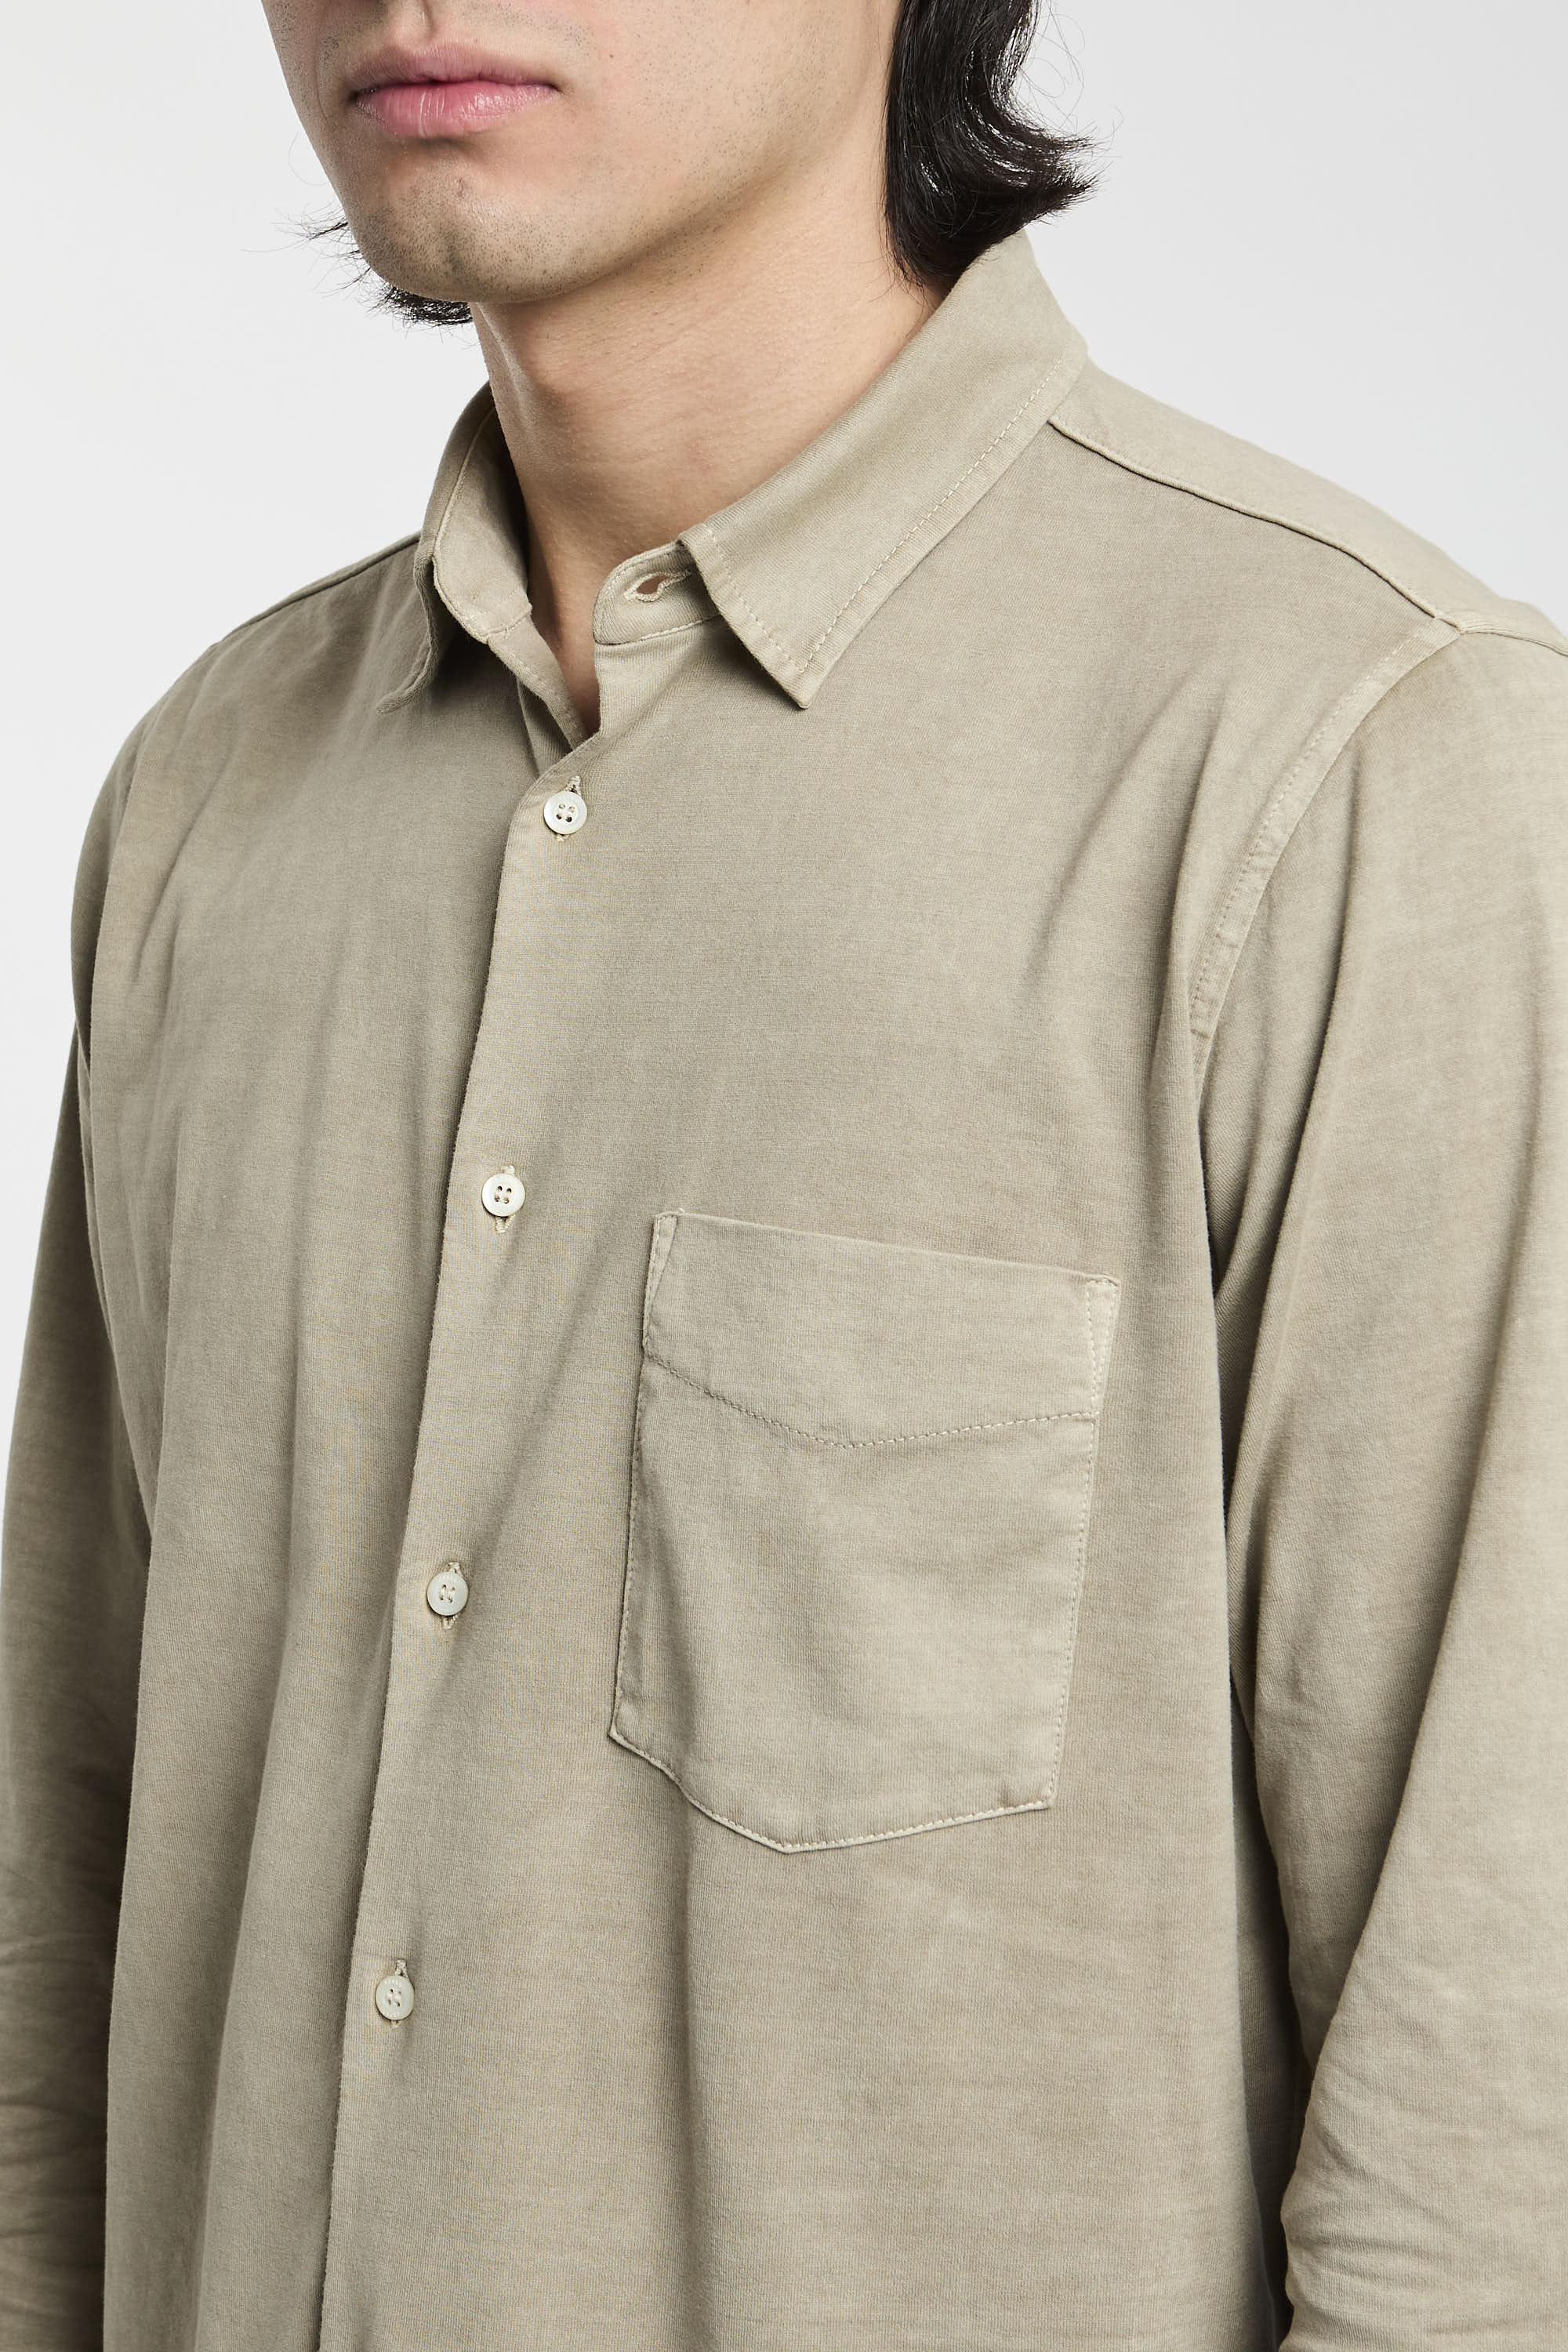 Aspesi Sand Cotton Shirt-3